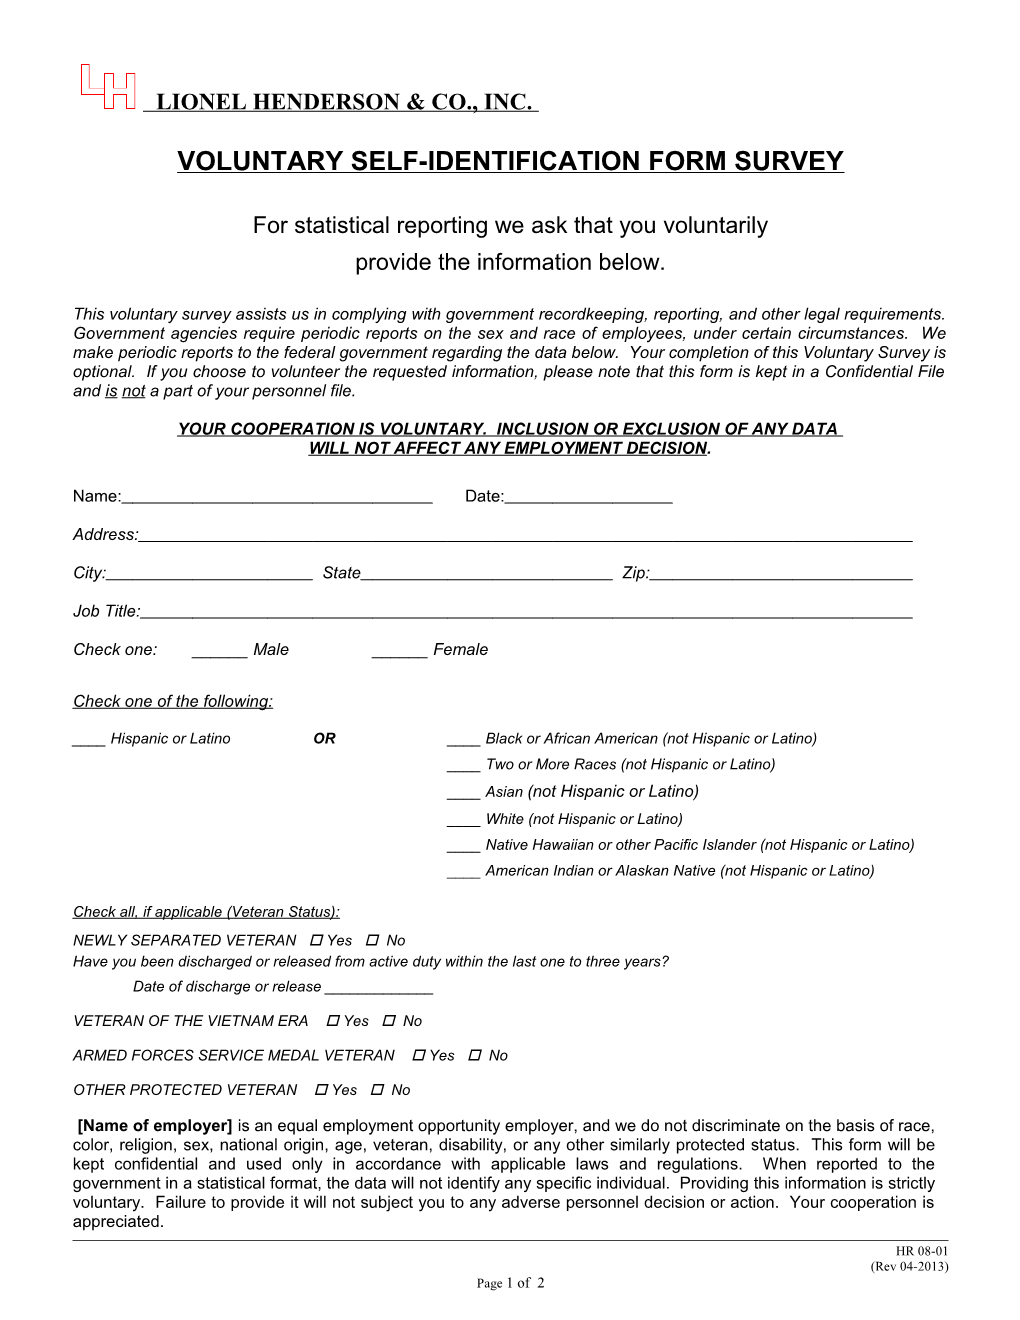 Voluntary Self-Identification Form Survey